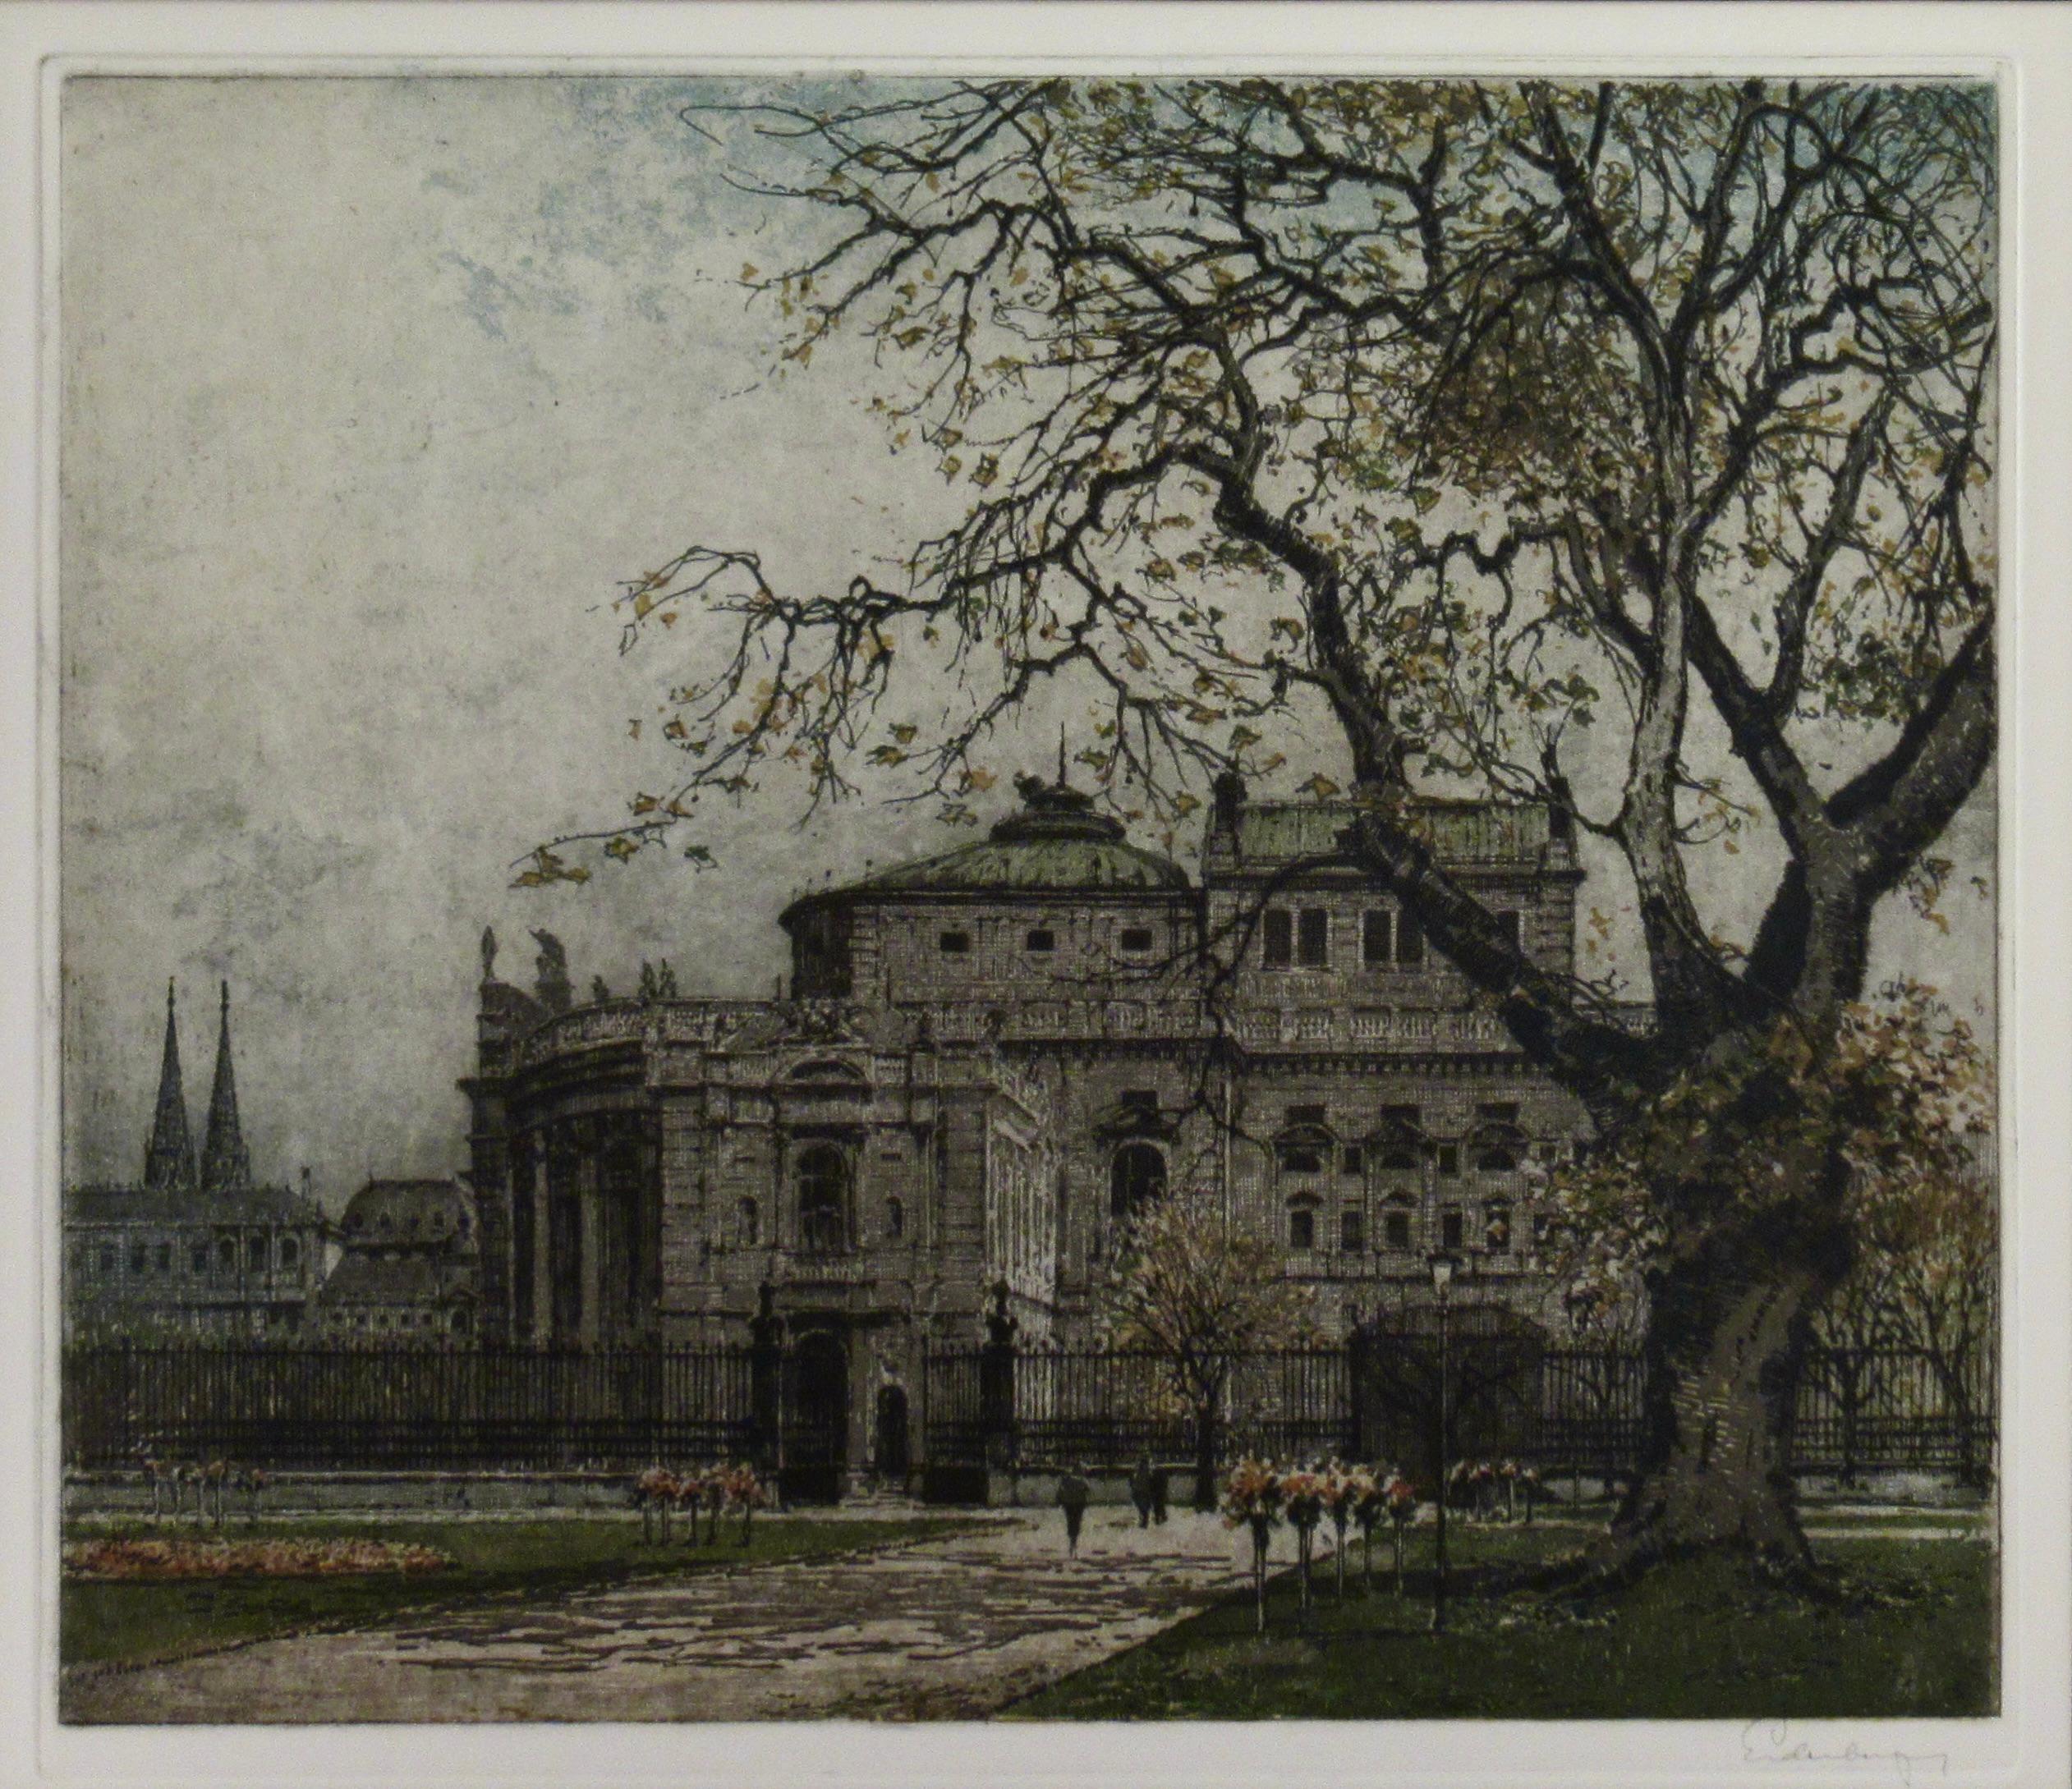 Burgtheater, Vienna - Print by Josef Eidenberger